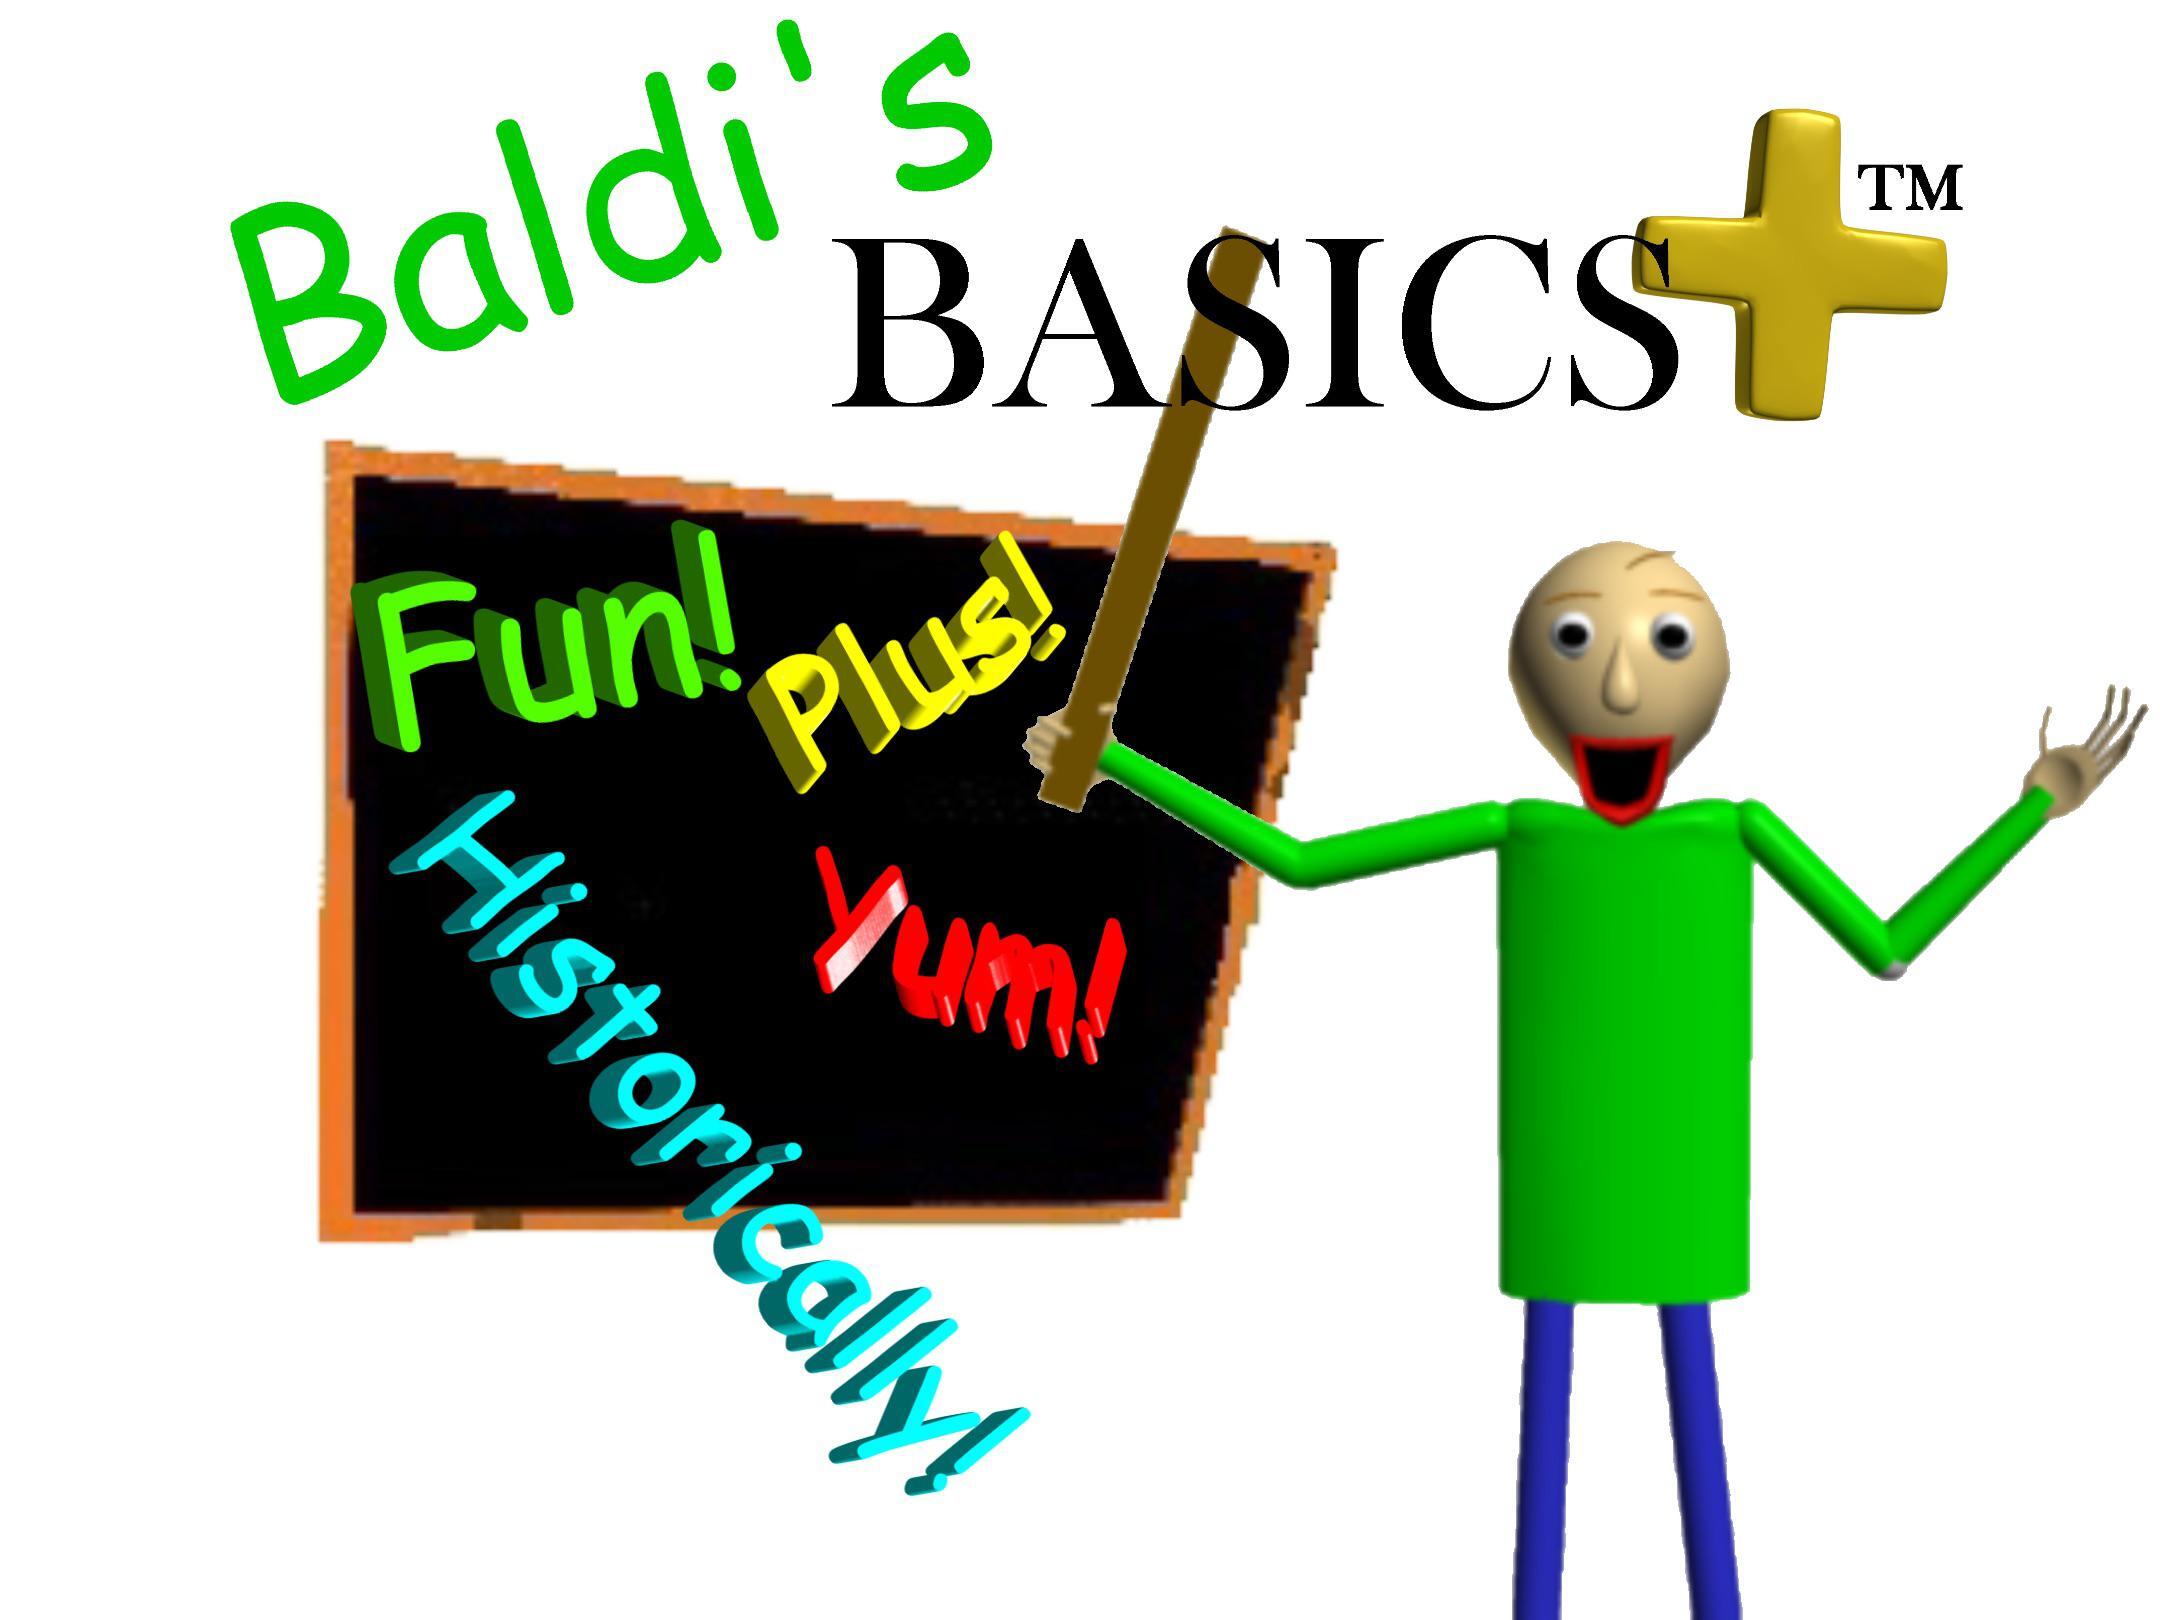 Baldi v 0.4. Baldi's Basics Plus 0.3 план. Baldi Basics Plus. Baldi Plus 0.2. Baldi's Basics Plus v0.4.